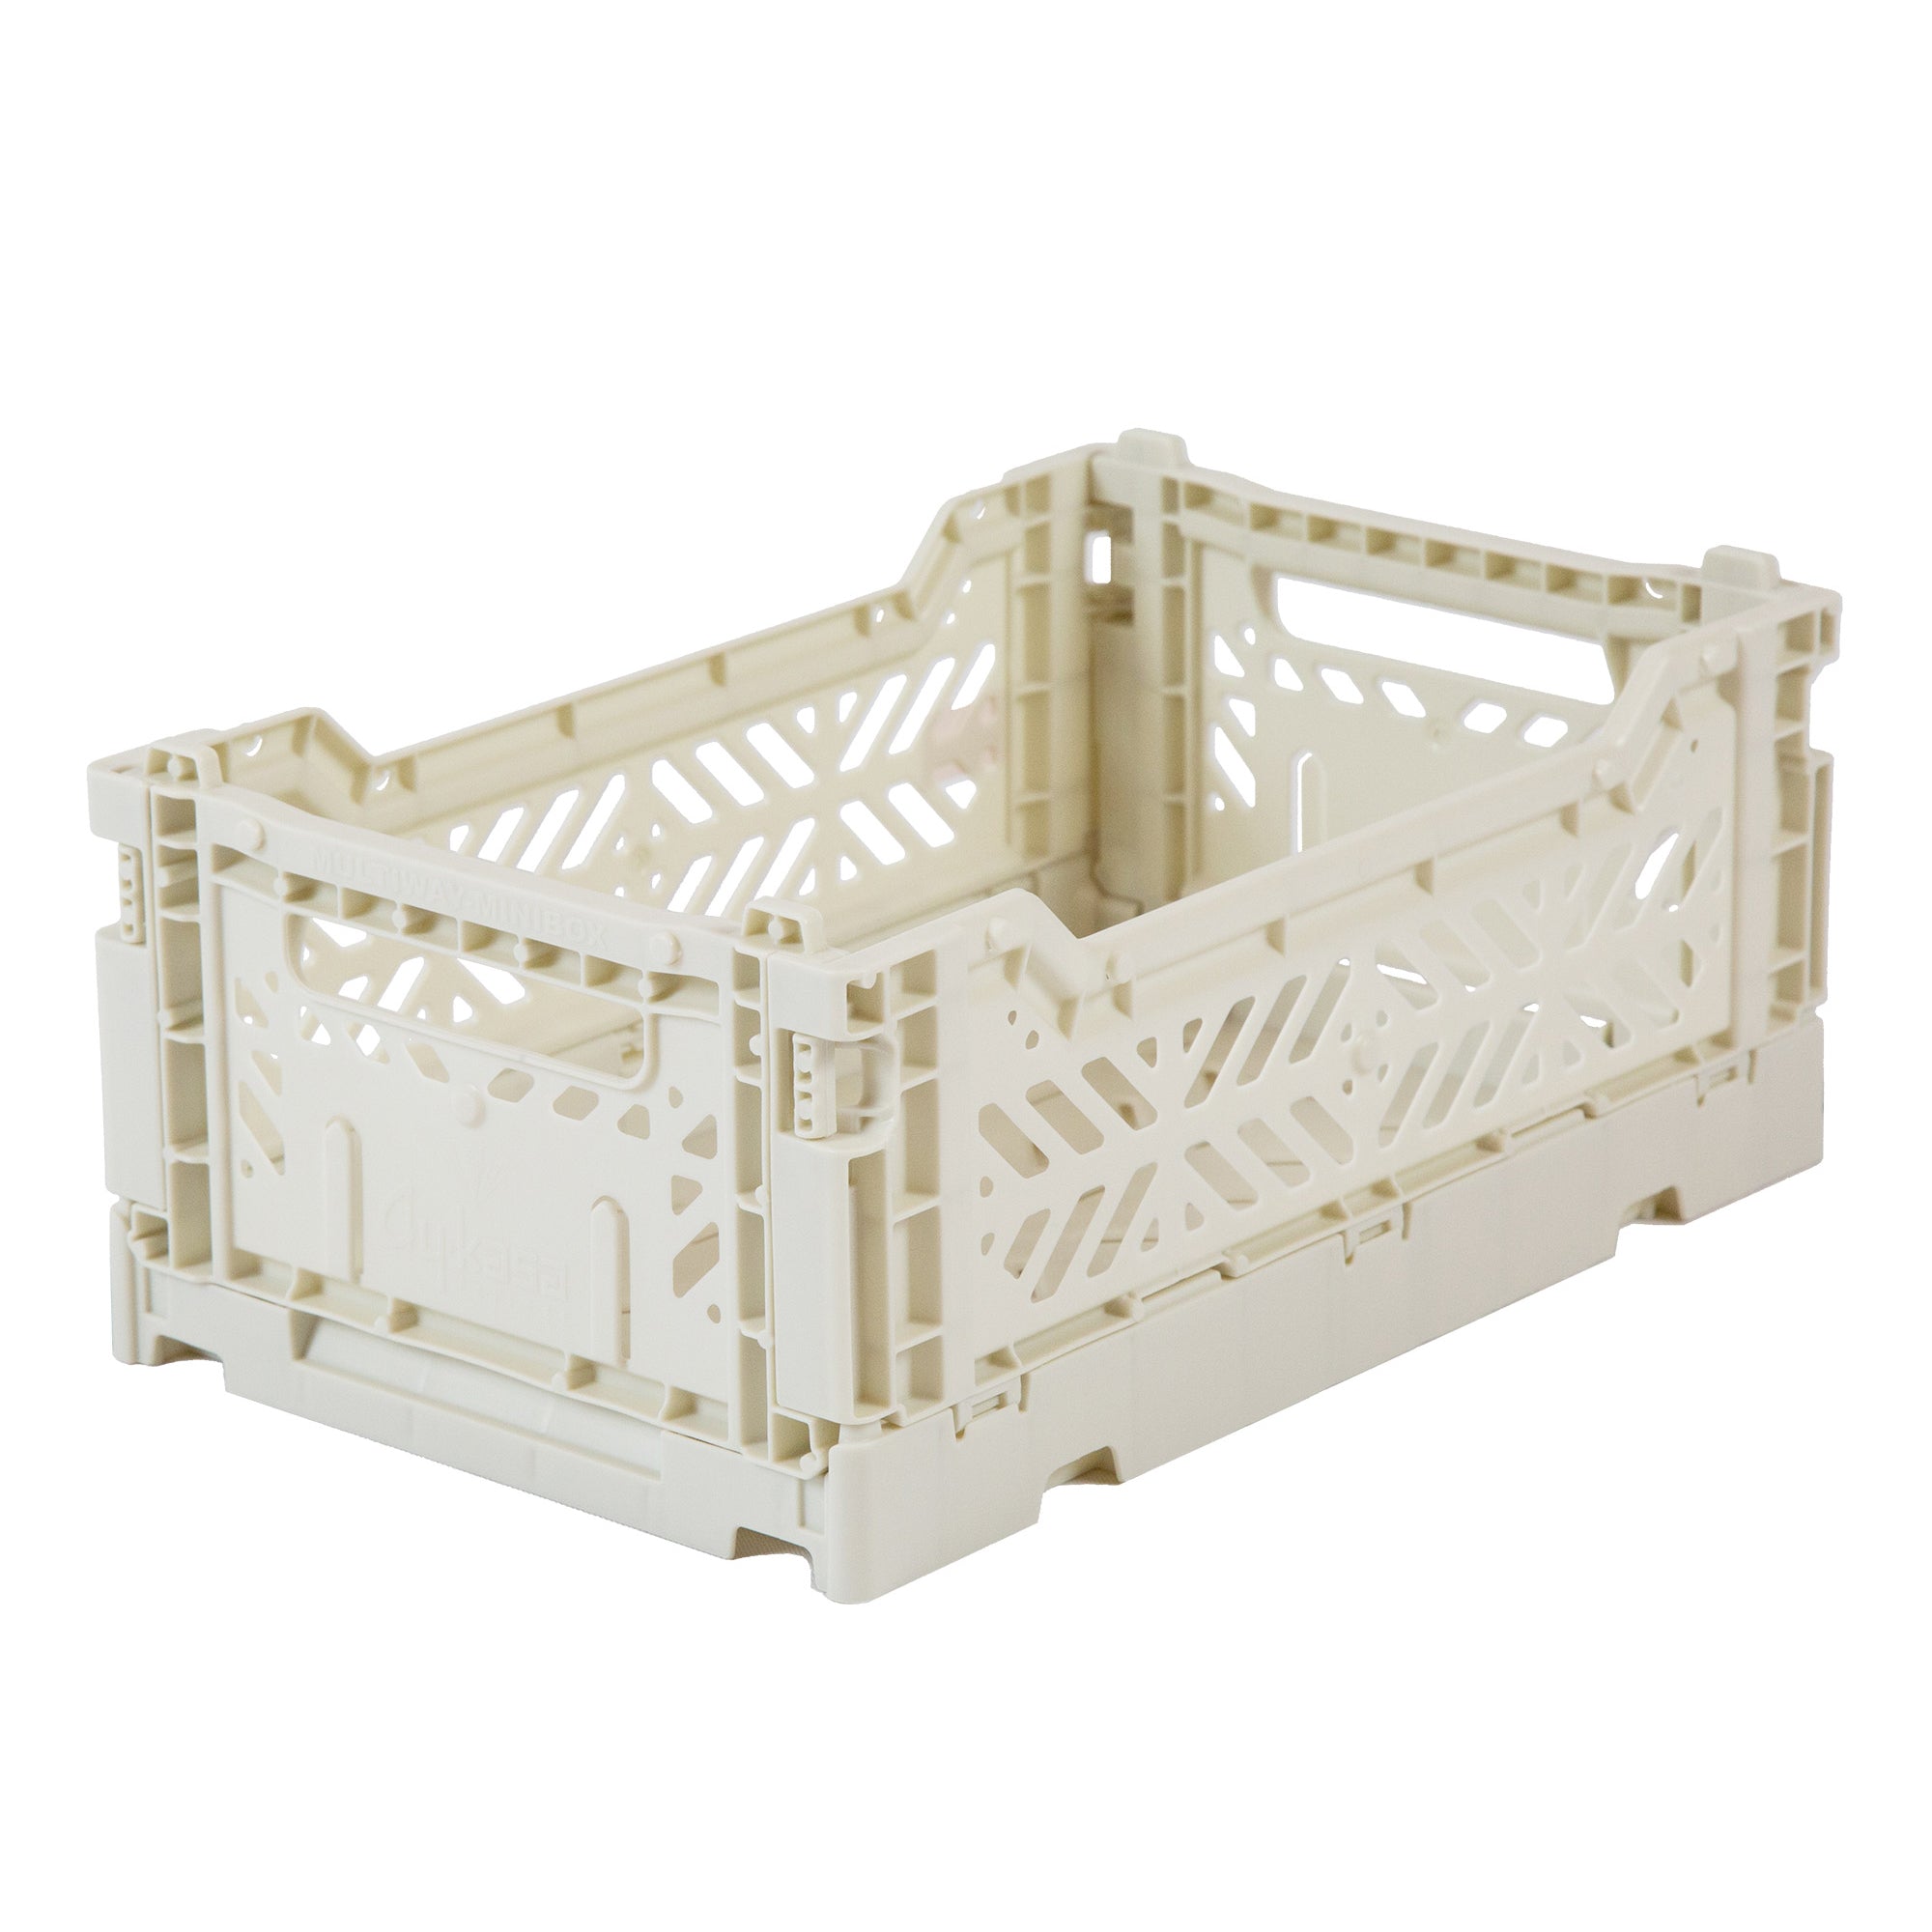 AYKASA Mini foldable box - Summer Made